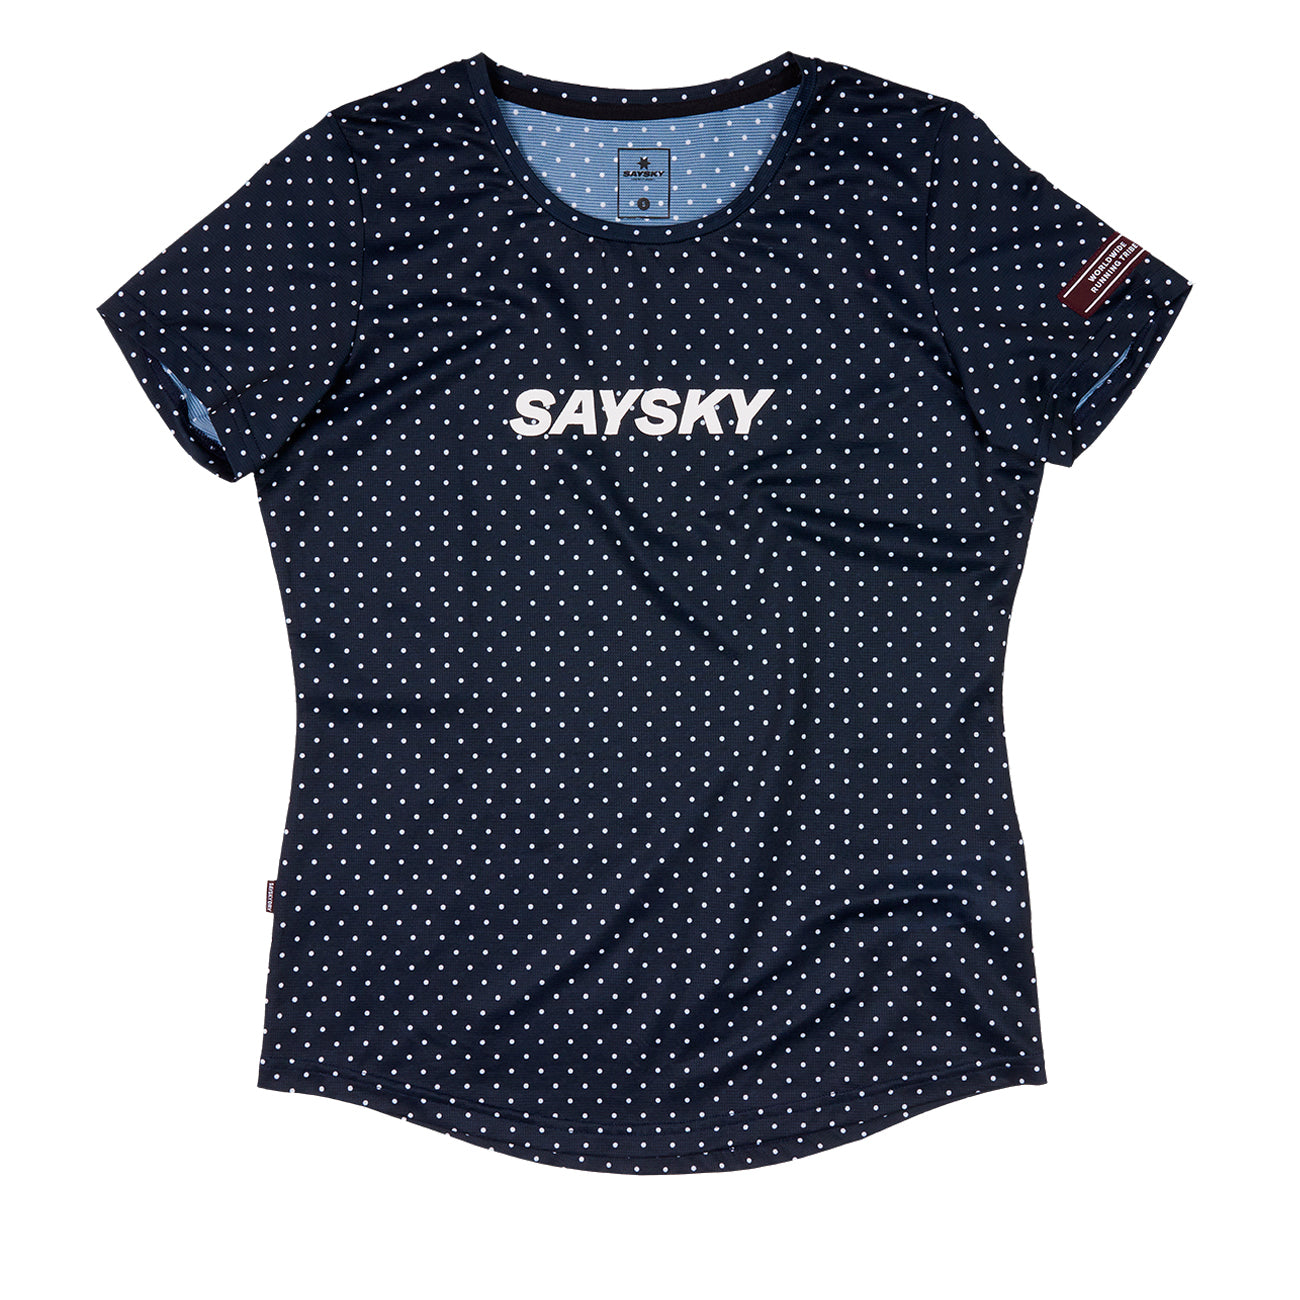 Saysky Wmns Polka Combat T-Shirt Damen Sky Captain Polka Dot